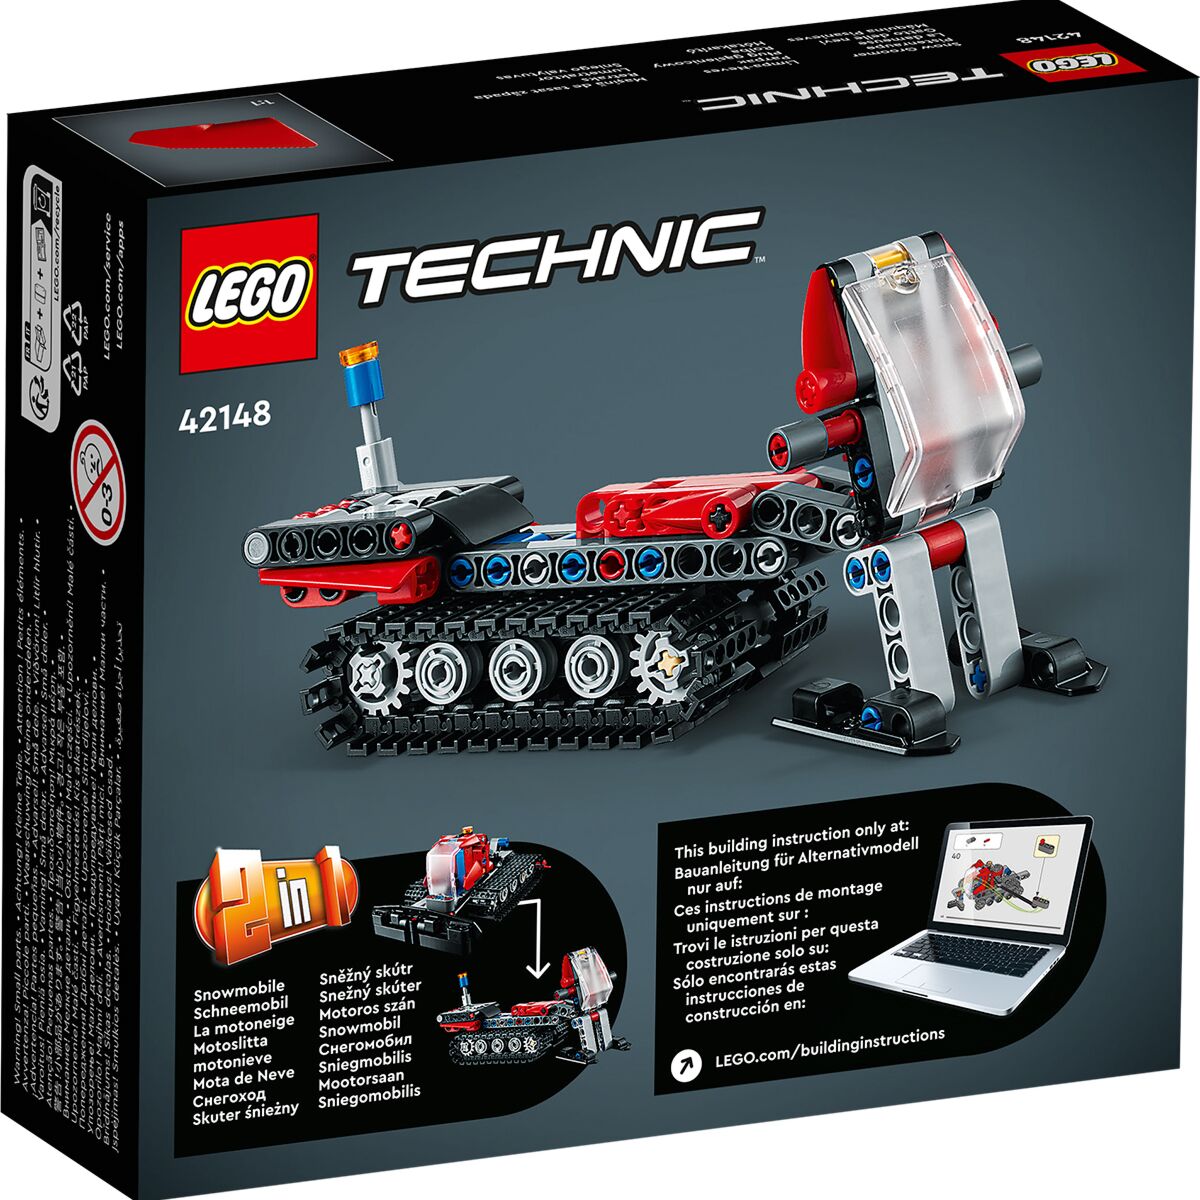 Конструктор LEGO Technic 42148 Снегоуборщик